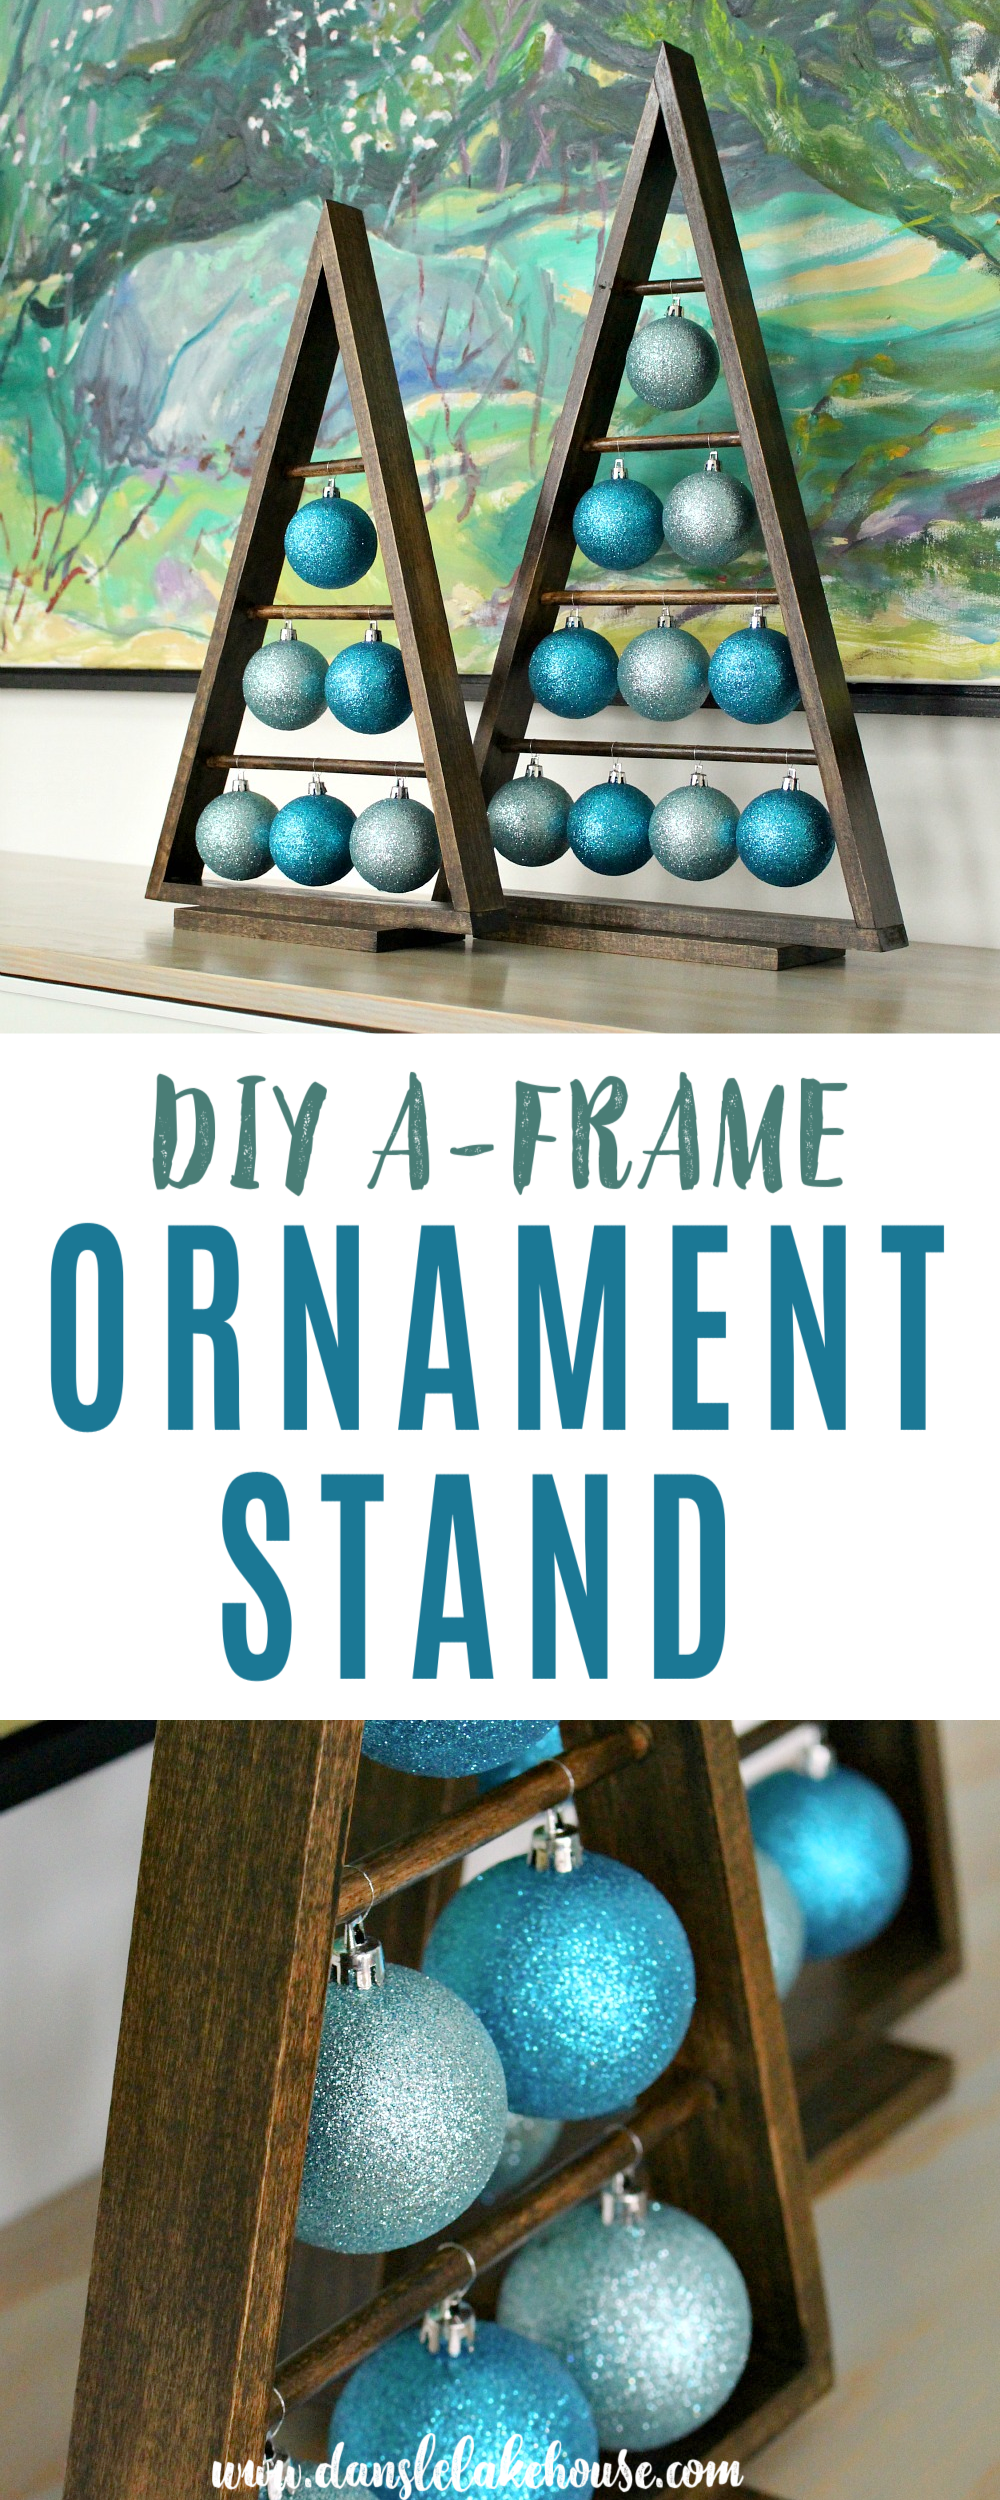 DIY A-Frame Ornament Stand